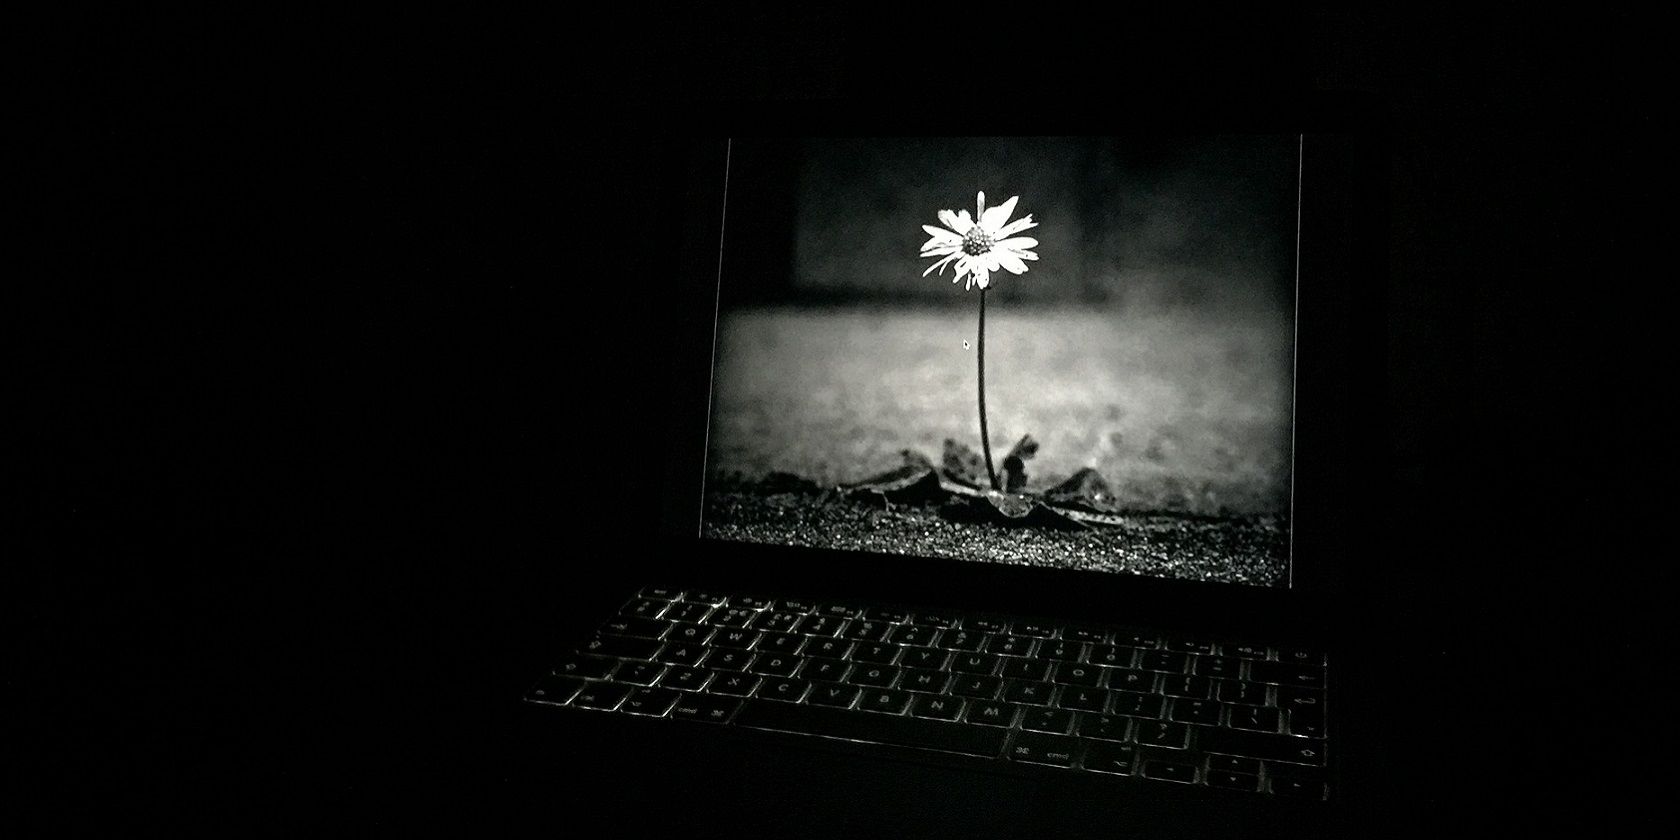 A laptop in dark room